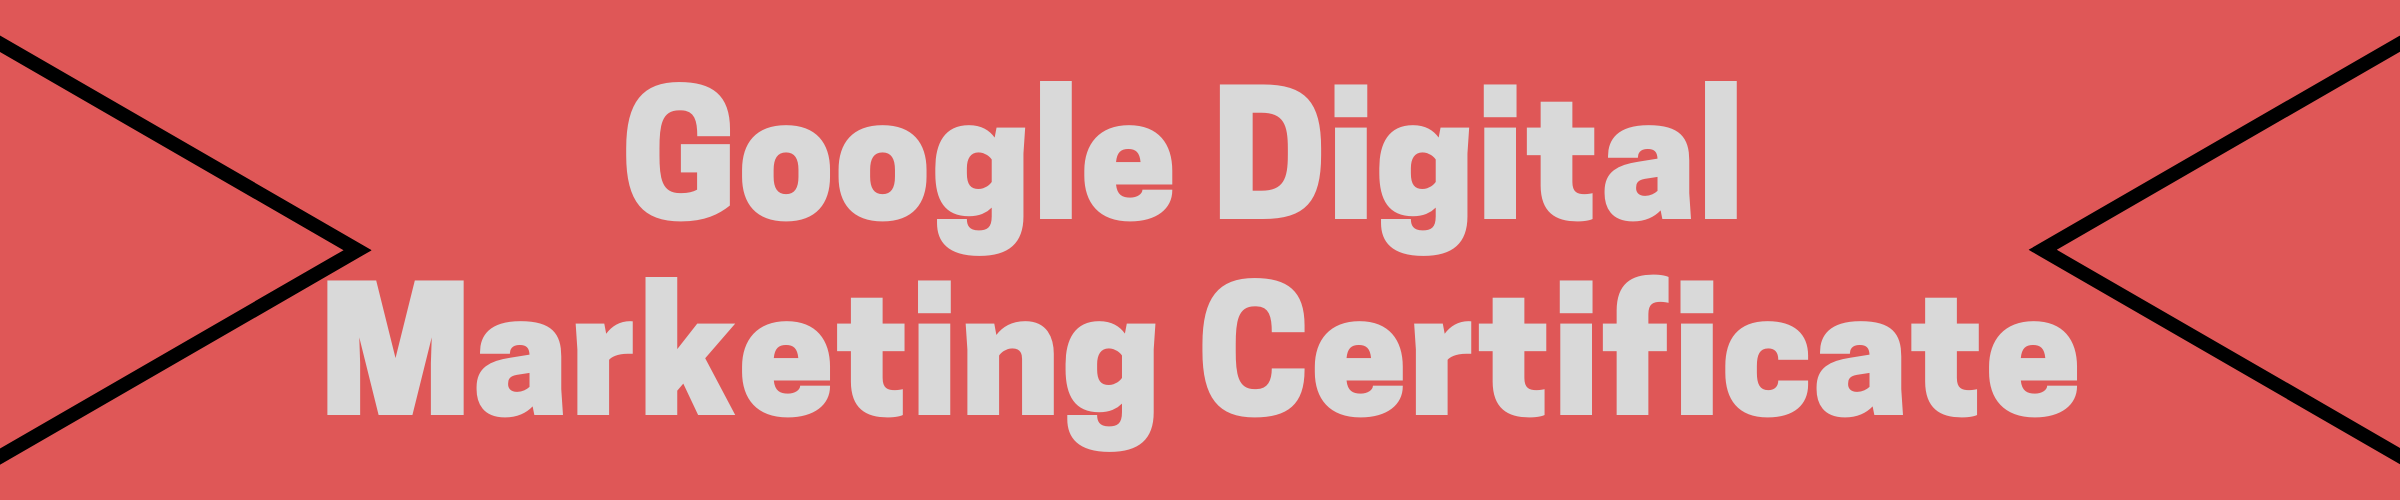 Google Fundamentals of Digital Marketing